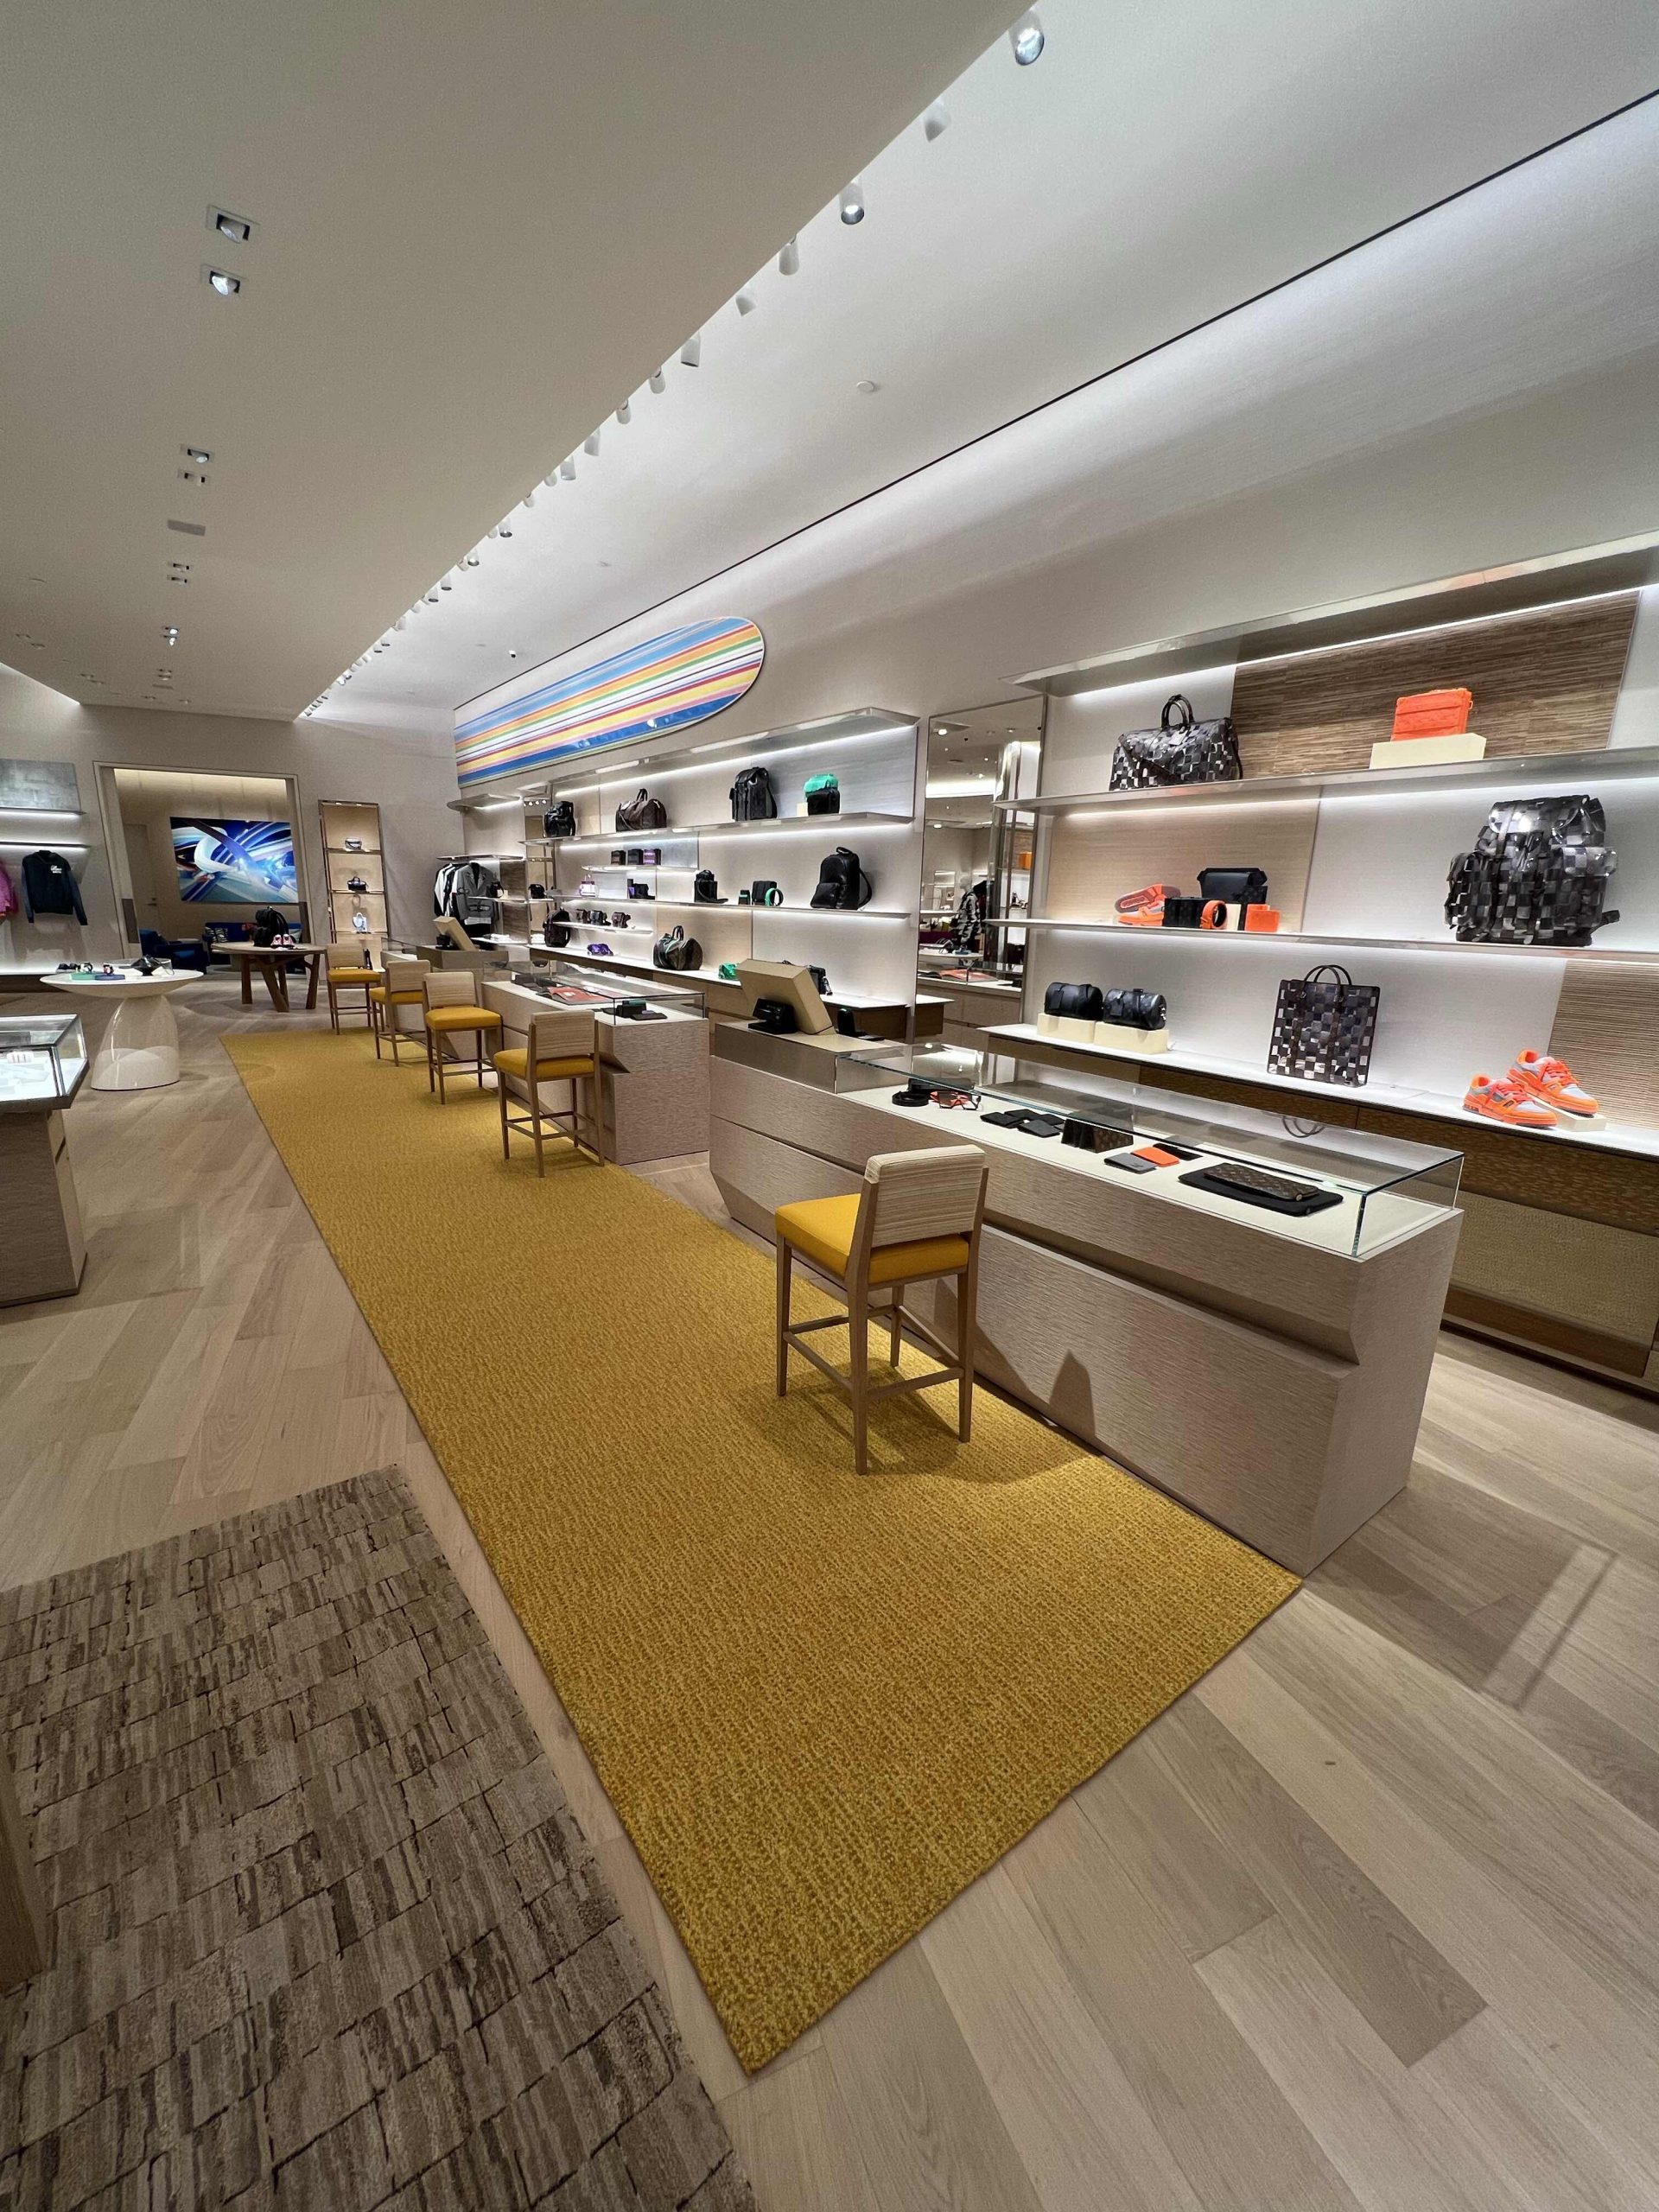 Louis Vuitton Costa Mesa store, United States